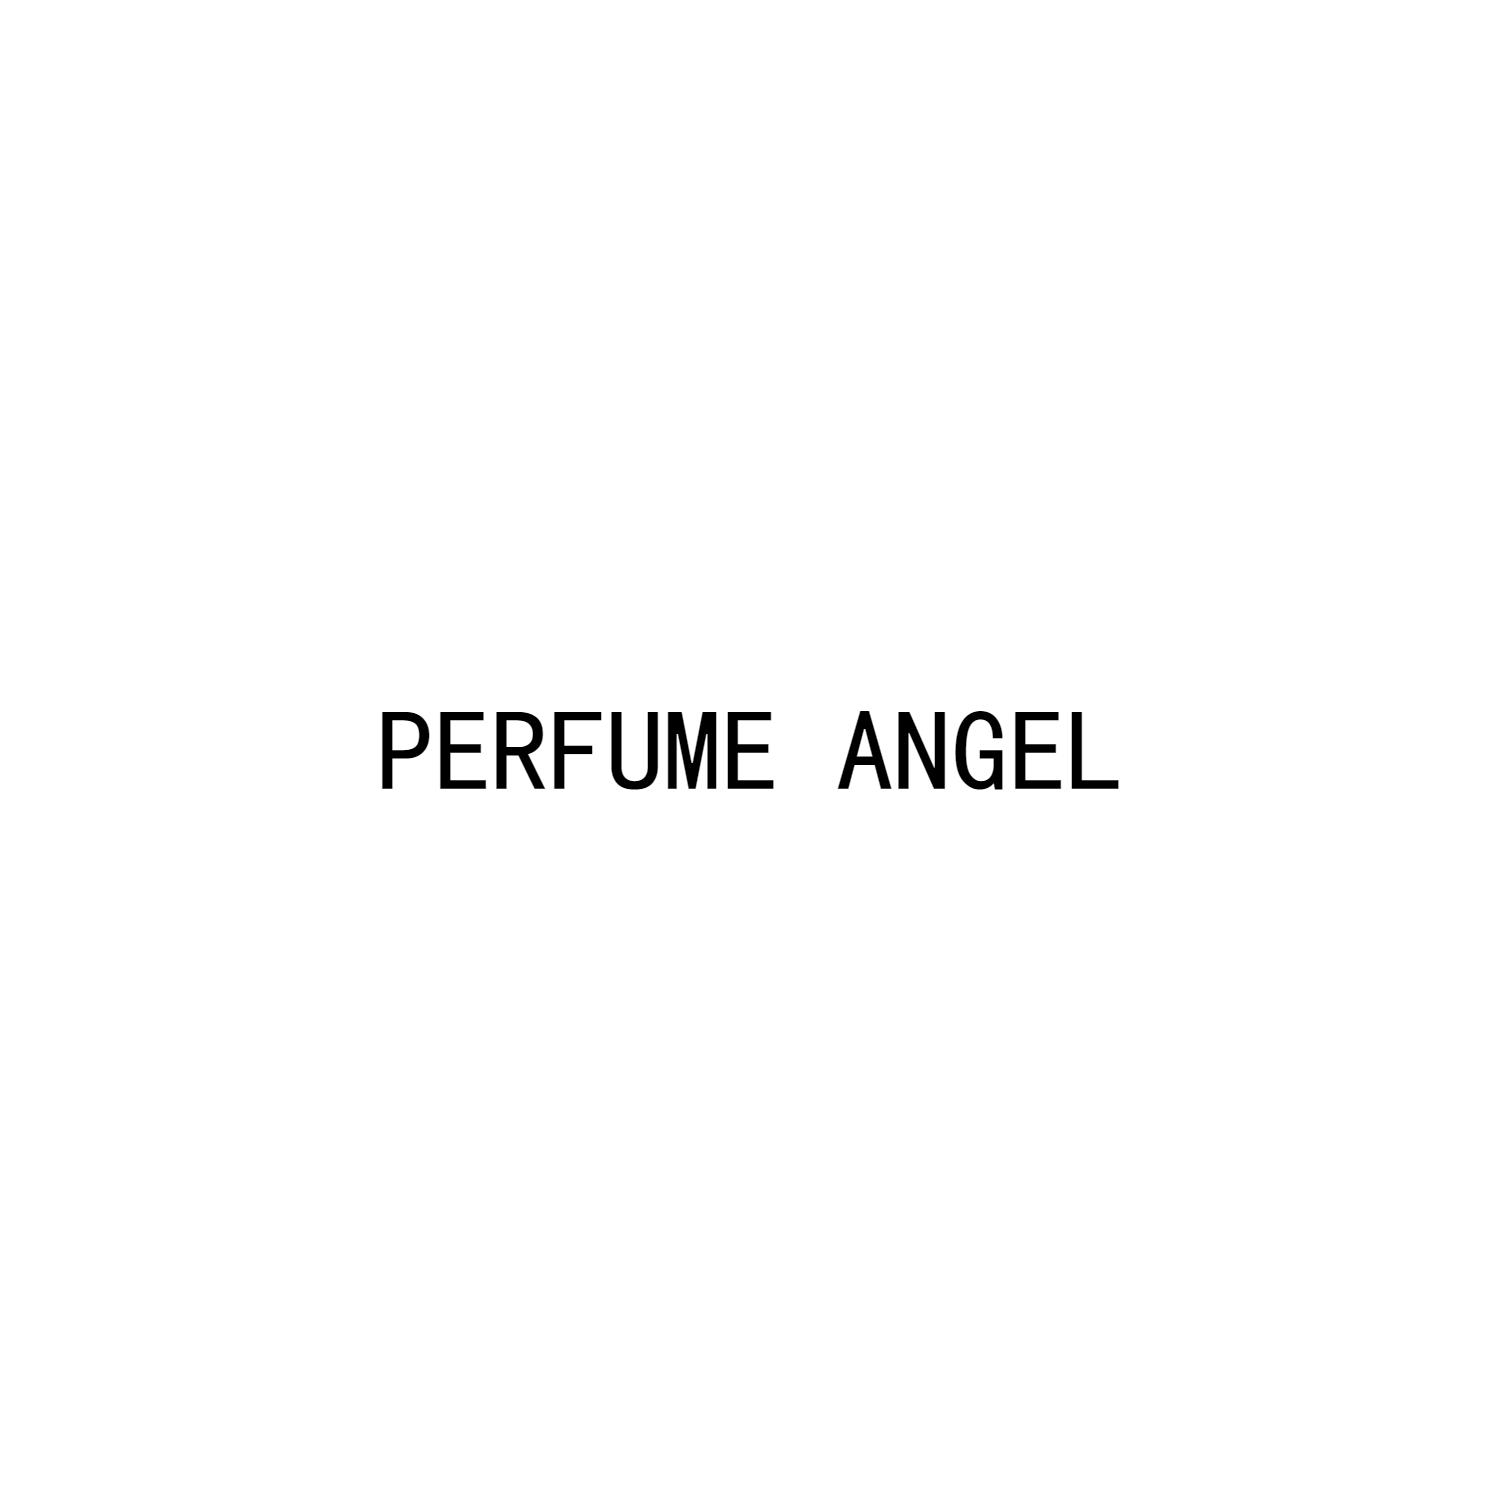 PERFUME ANGEL